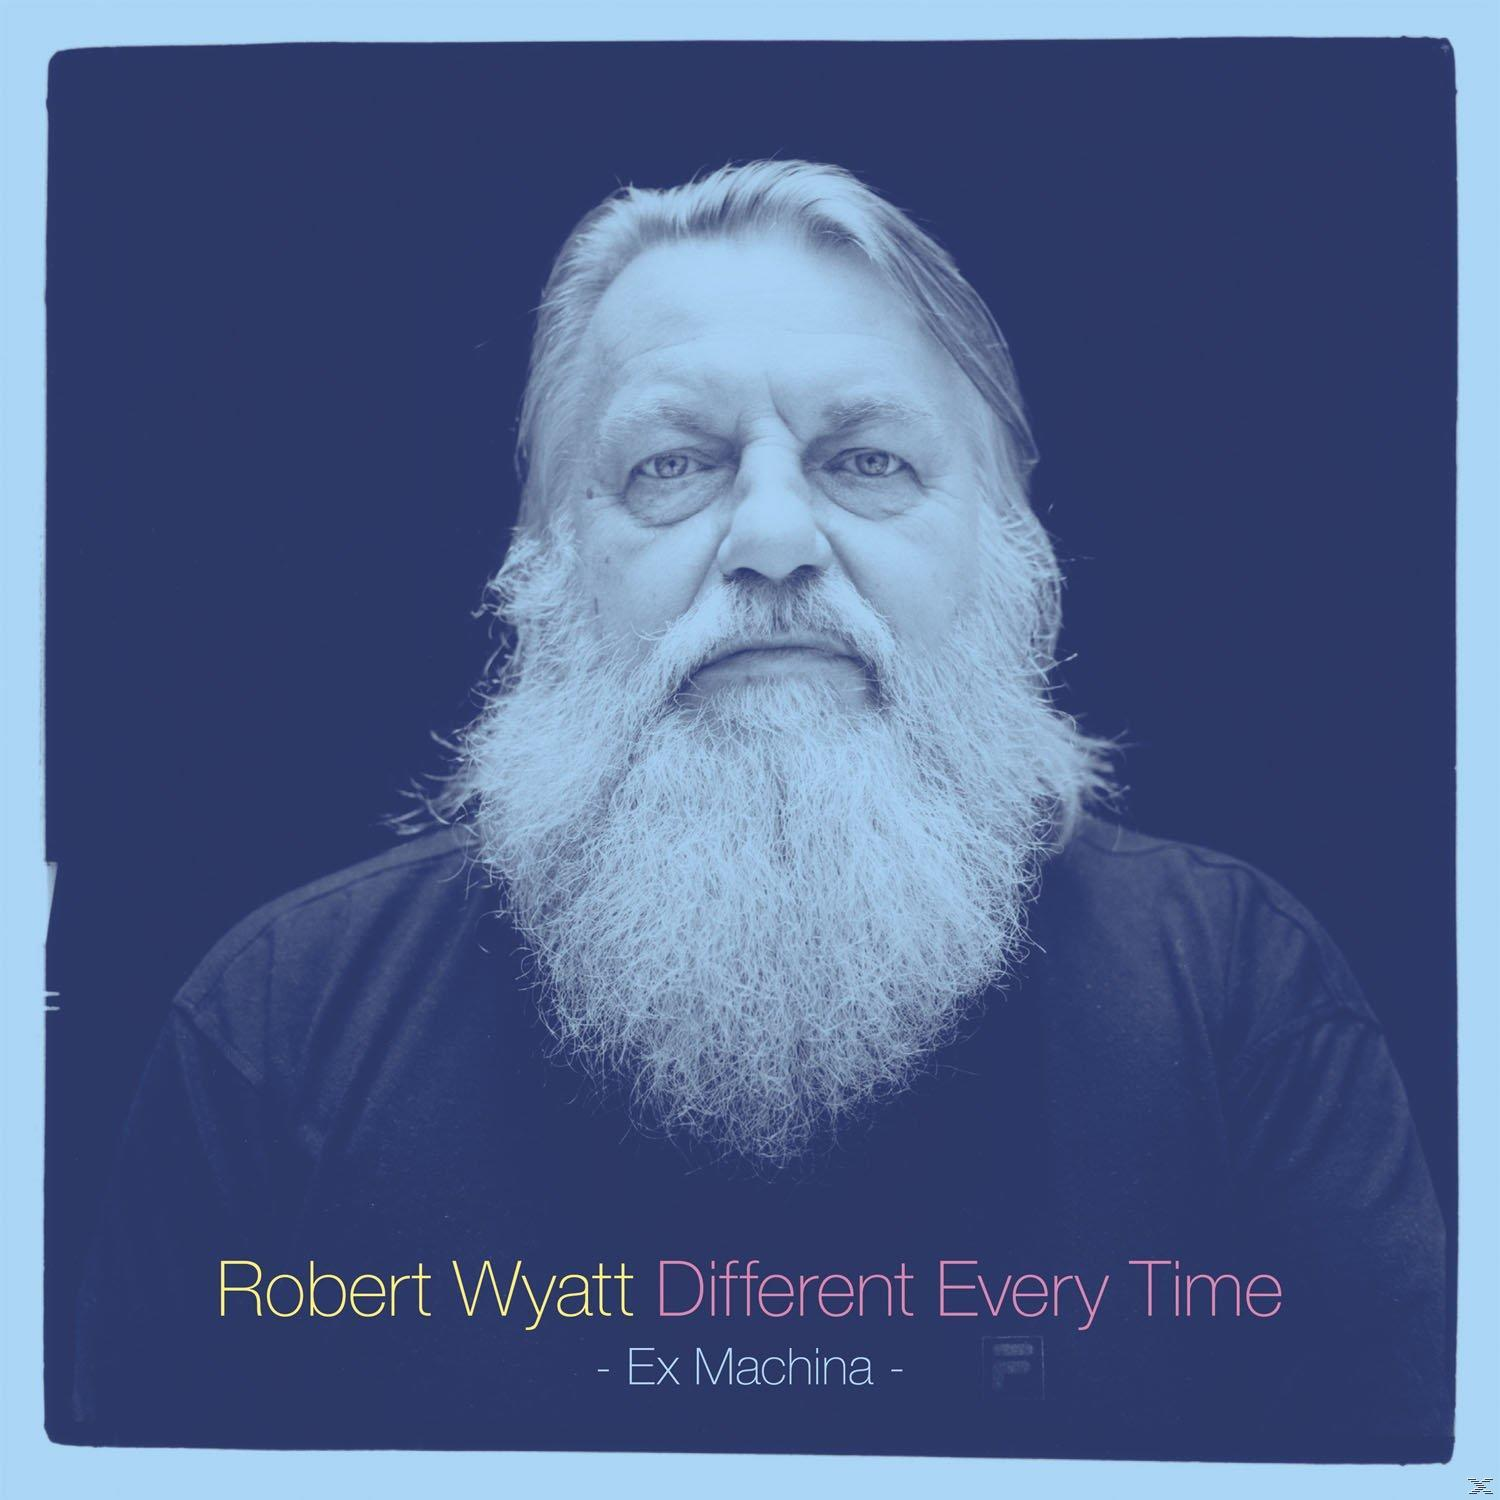 Time Wyatt Different Volume - + (LP Robert 1 Download) - Every - Ex Machina